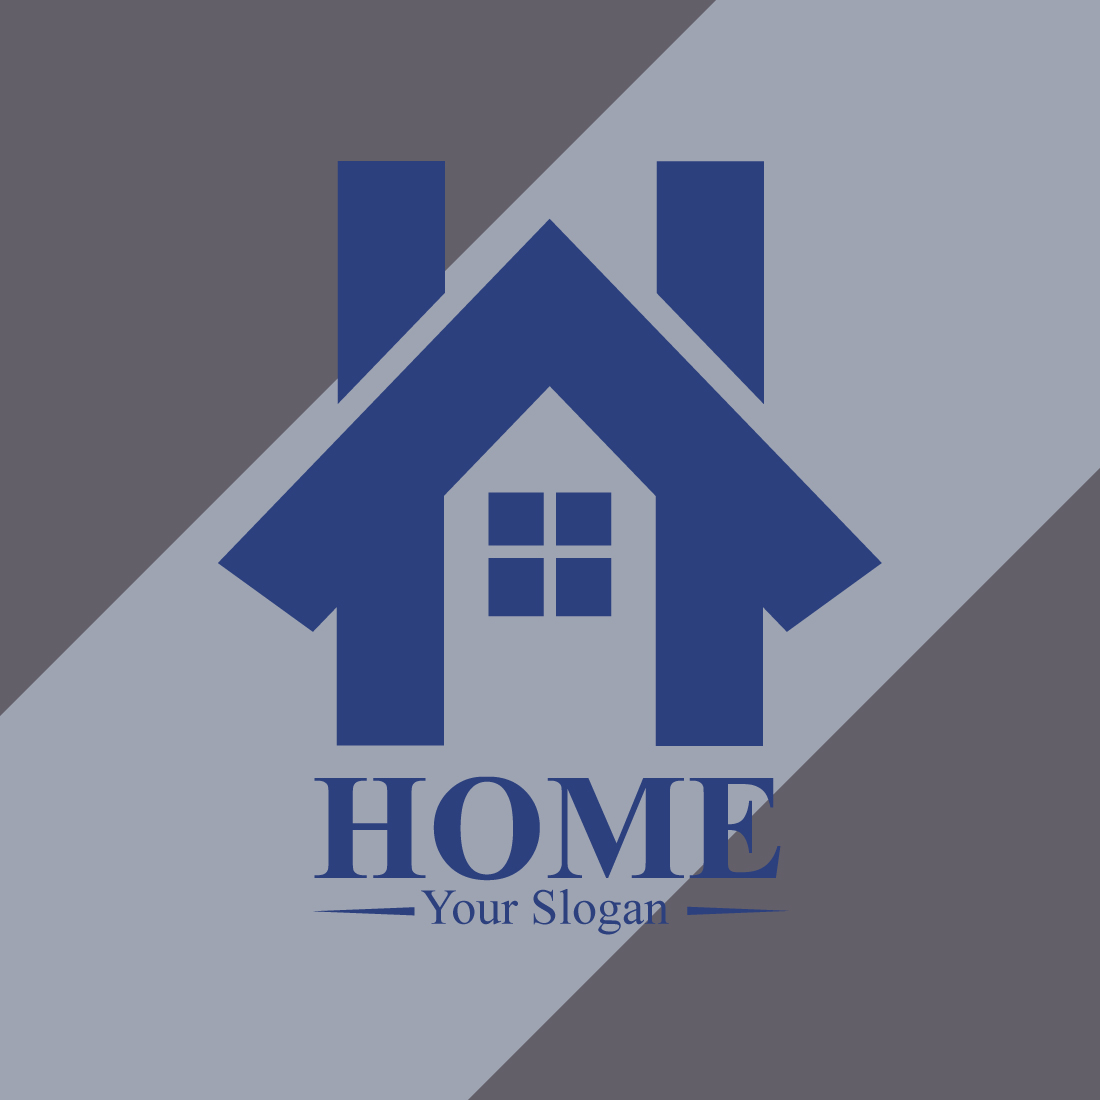 Home Logo preview image.